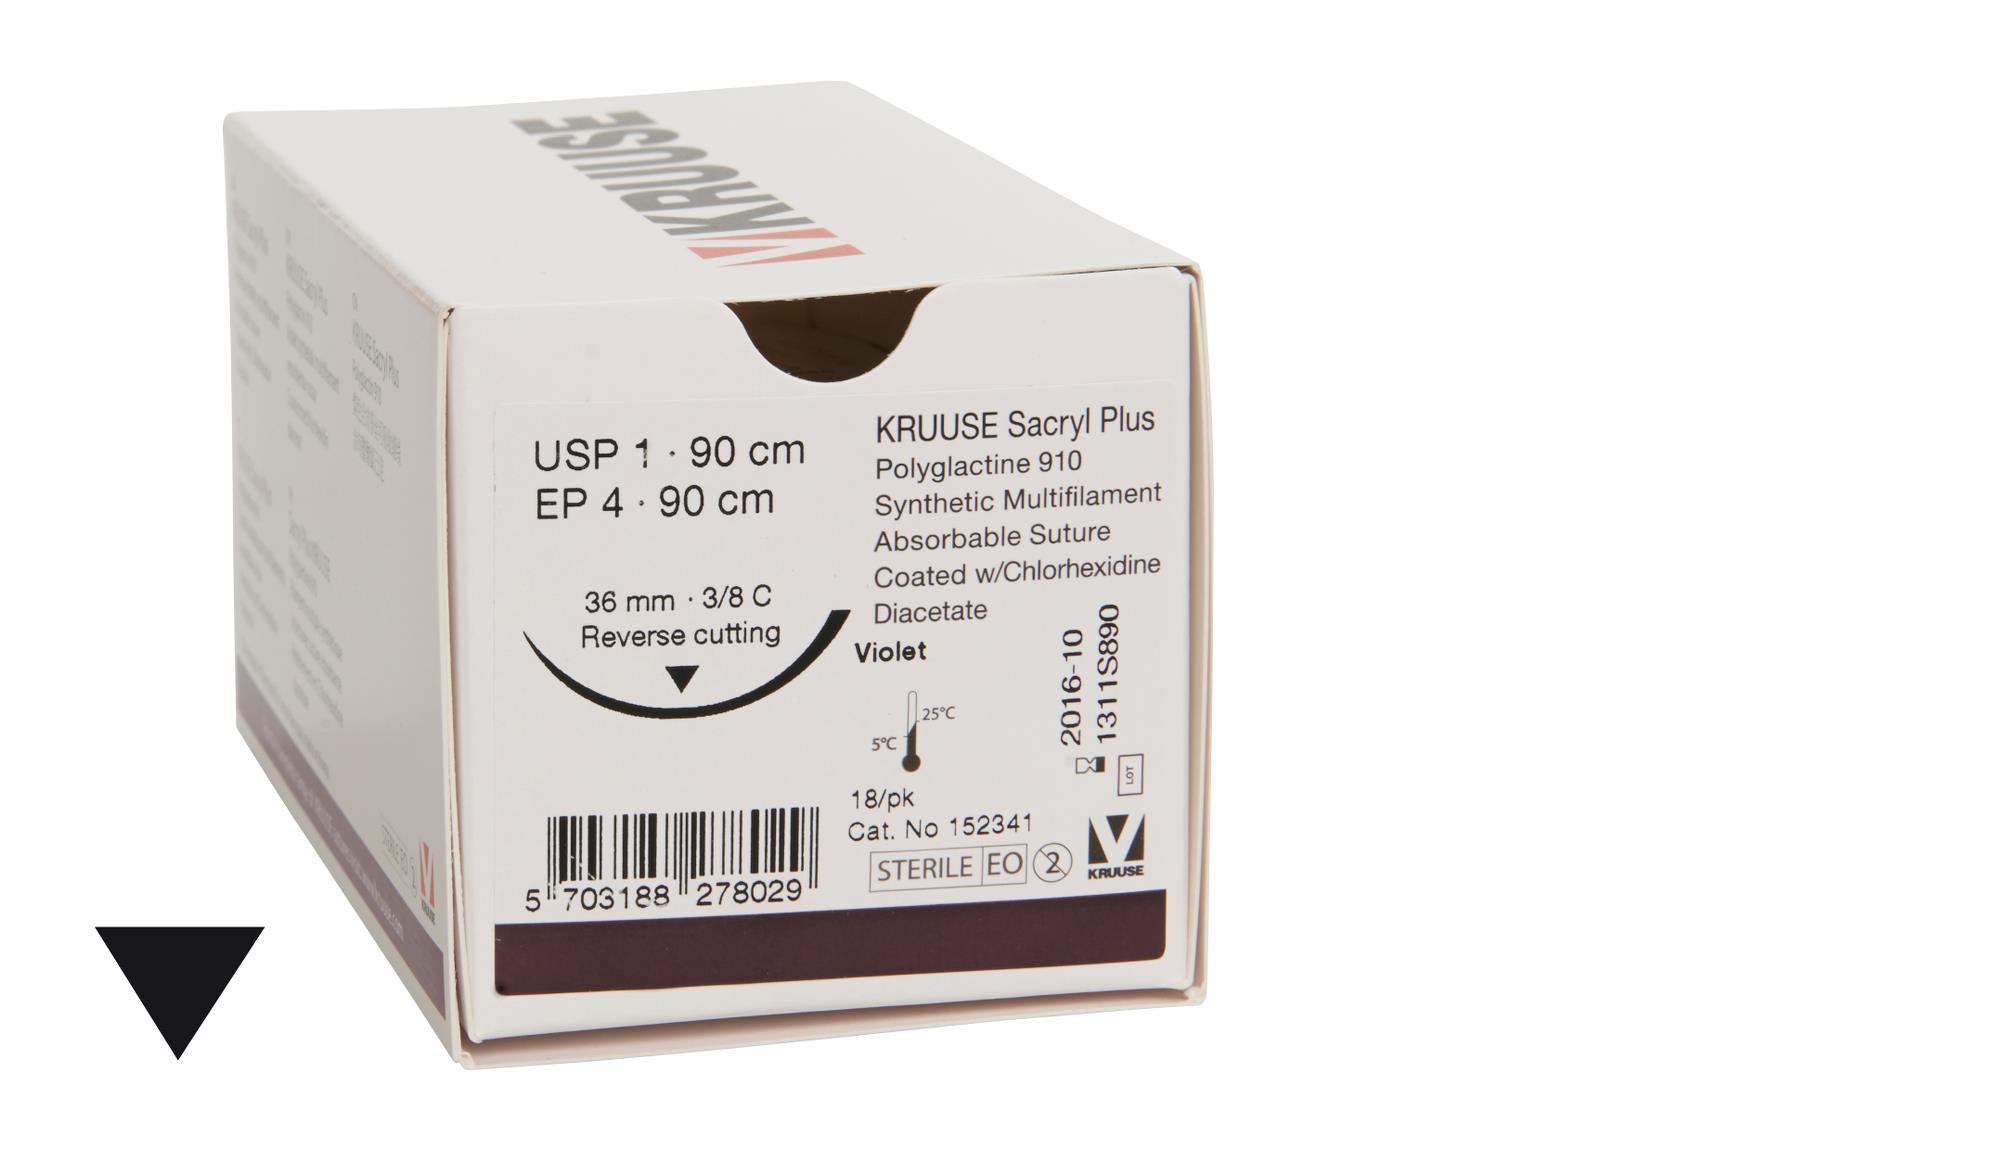 KRUUSE Sacryl Plus suture, USP 1, 90 cm, 36 mm, 3/8C, RC, 18/pk